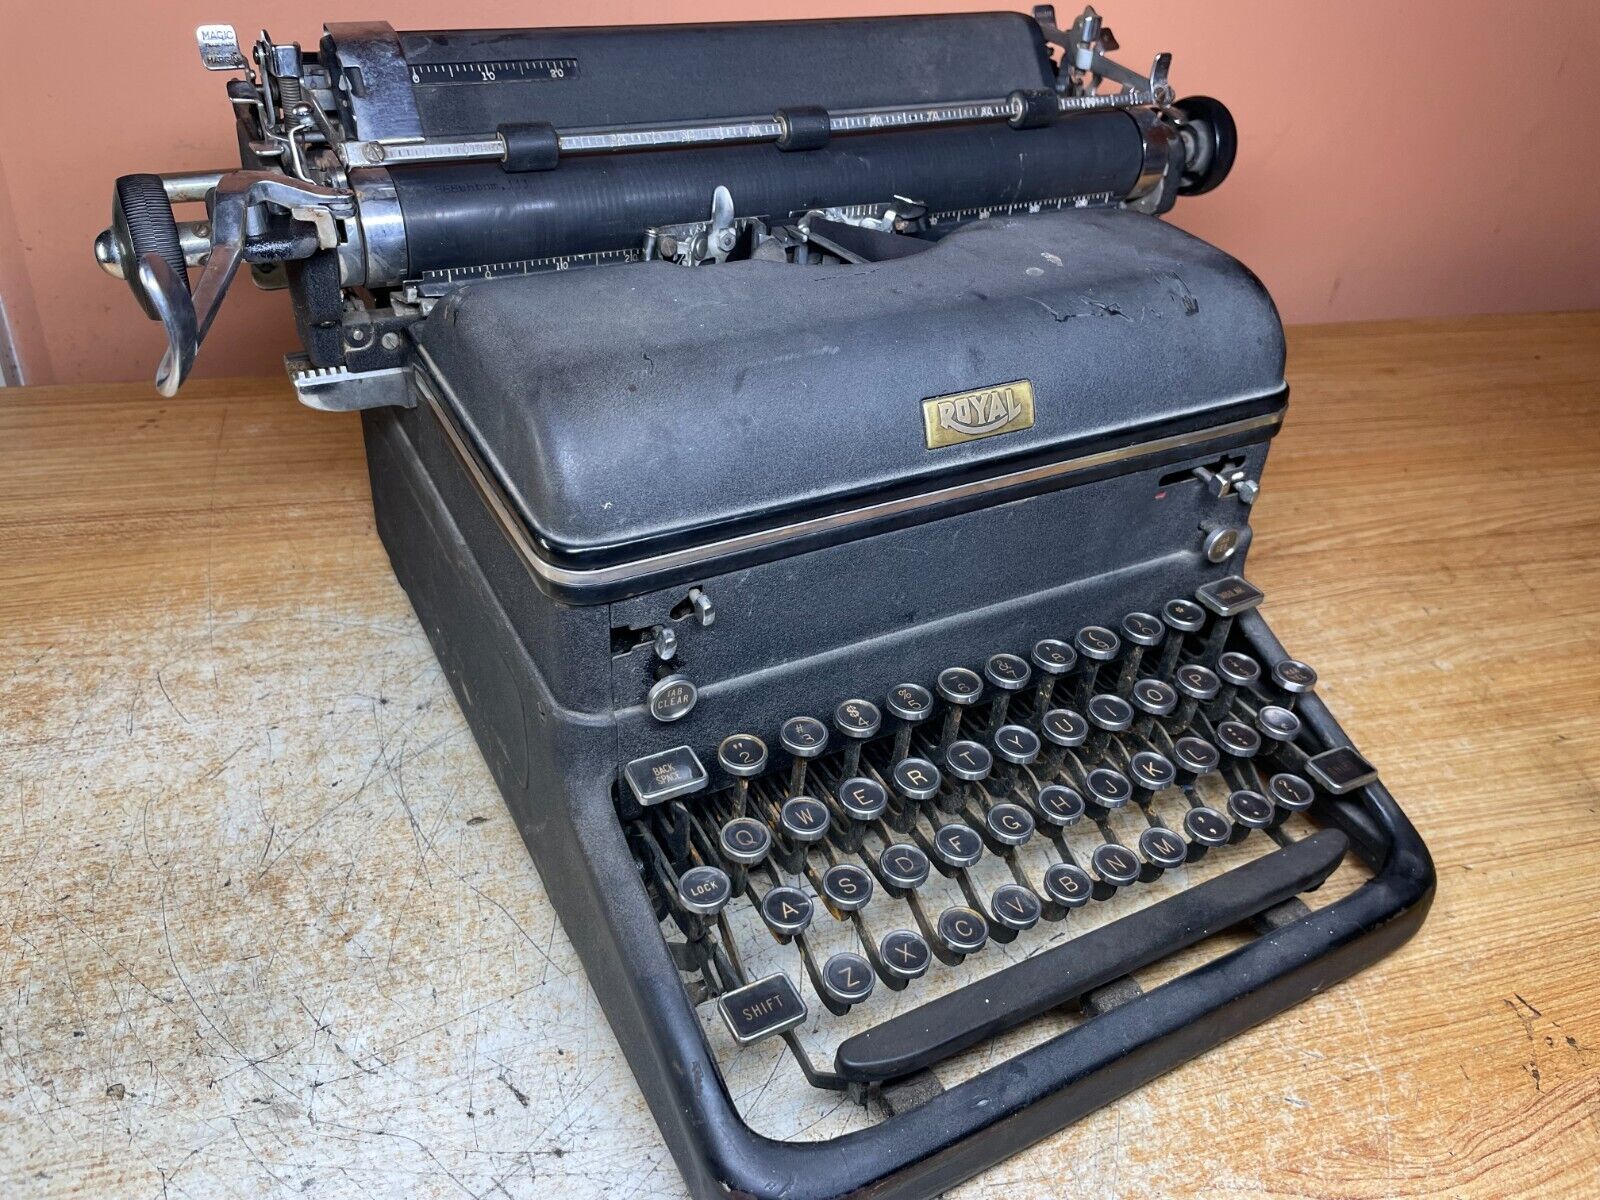 1940 Royal KMM-12 Working Vintage Desktop Typewriter w New Ink Wide Carriage